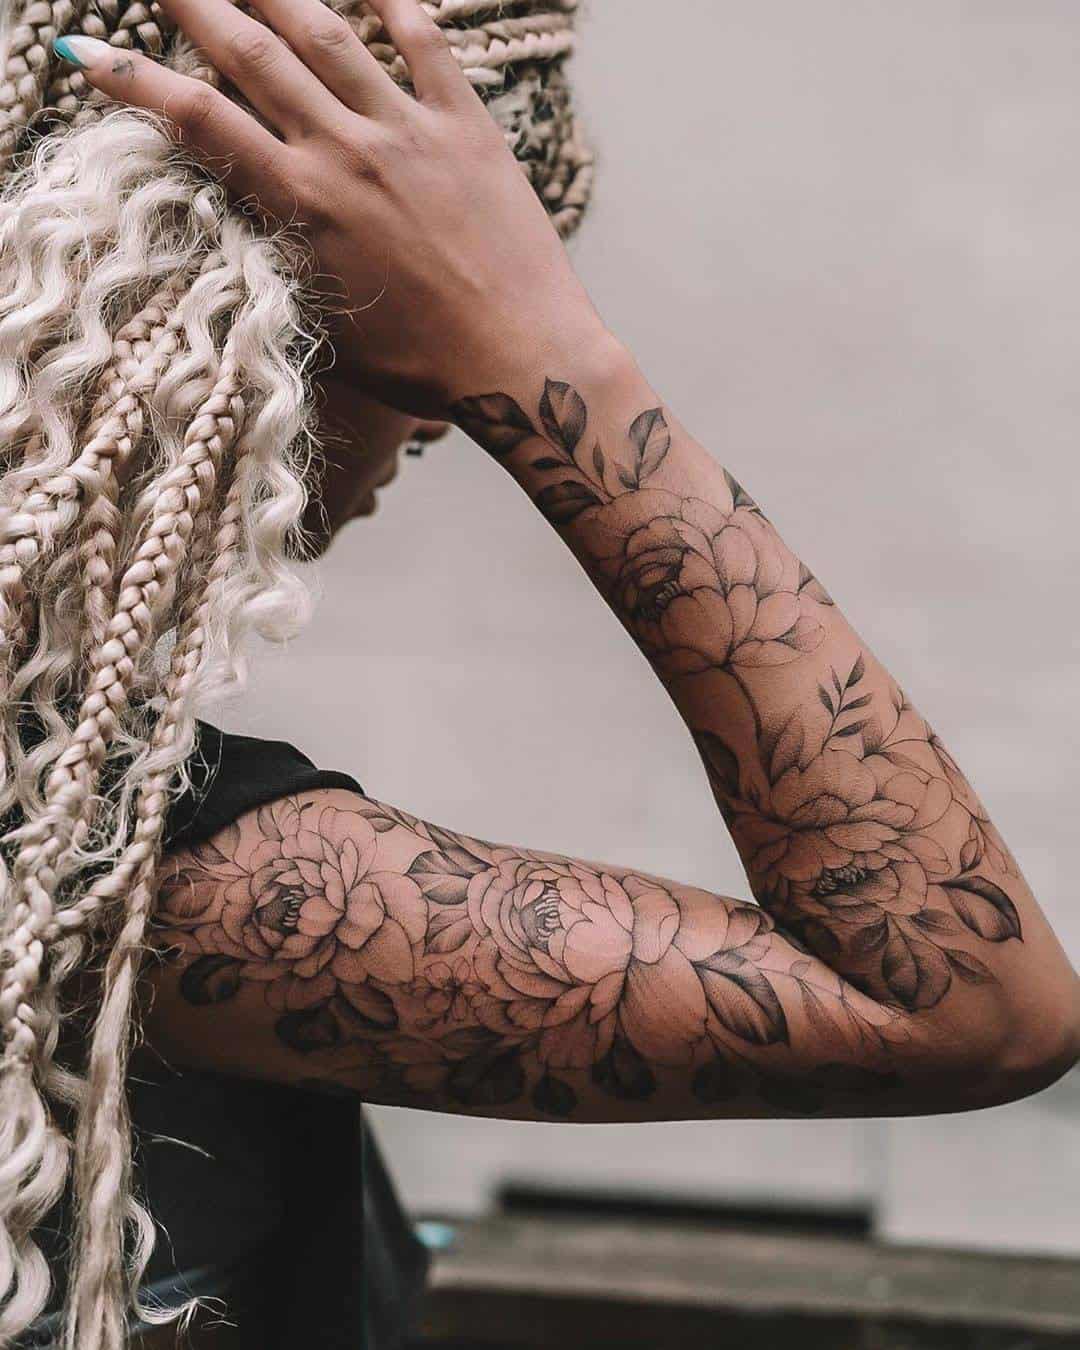 Greatest Tattoos Designs: Unique Half Sleeve Tattoos for Women | Sleeve  tattoos, Tattoos for women half sleeve, Half sleeve tattoos designs